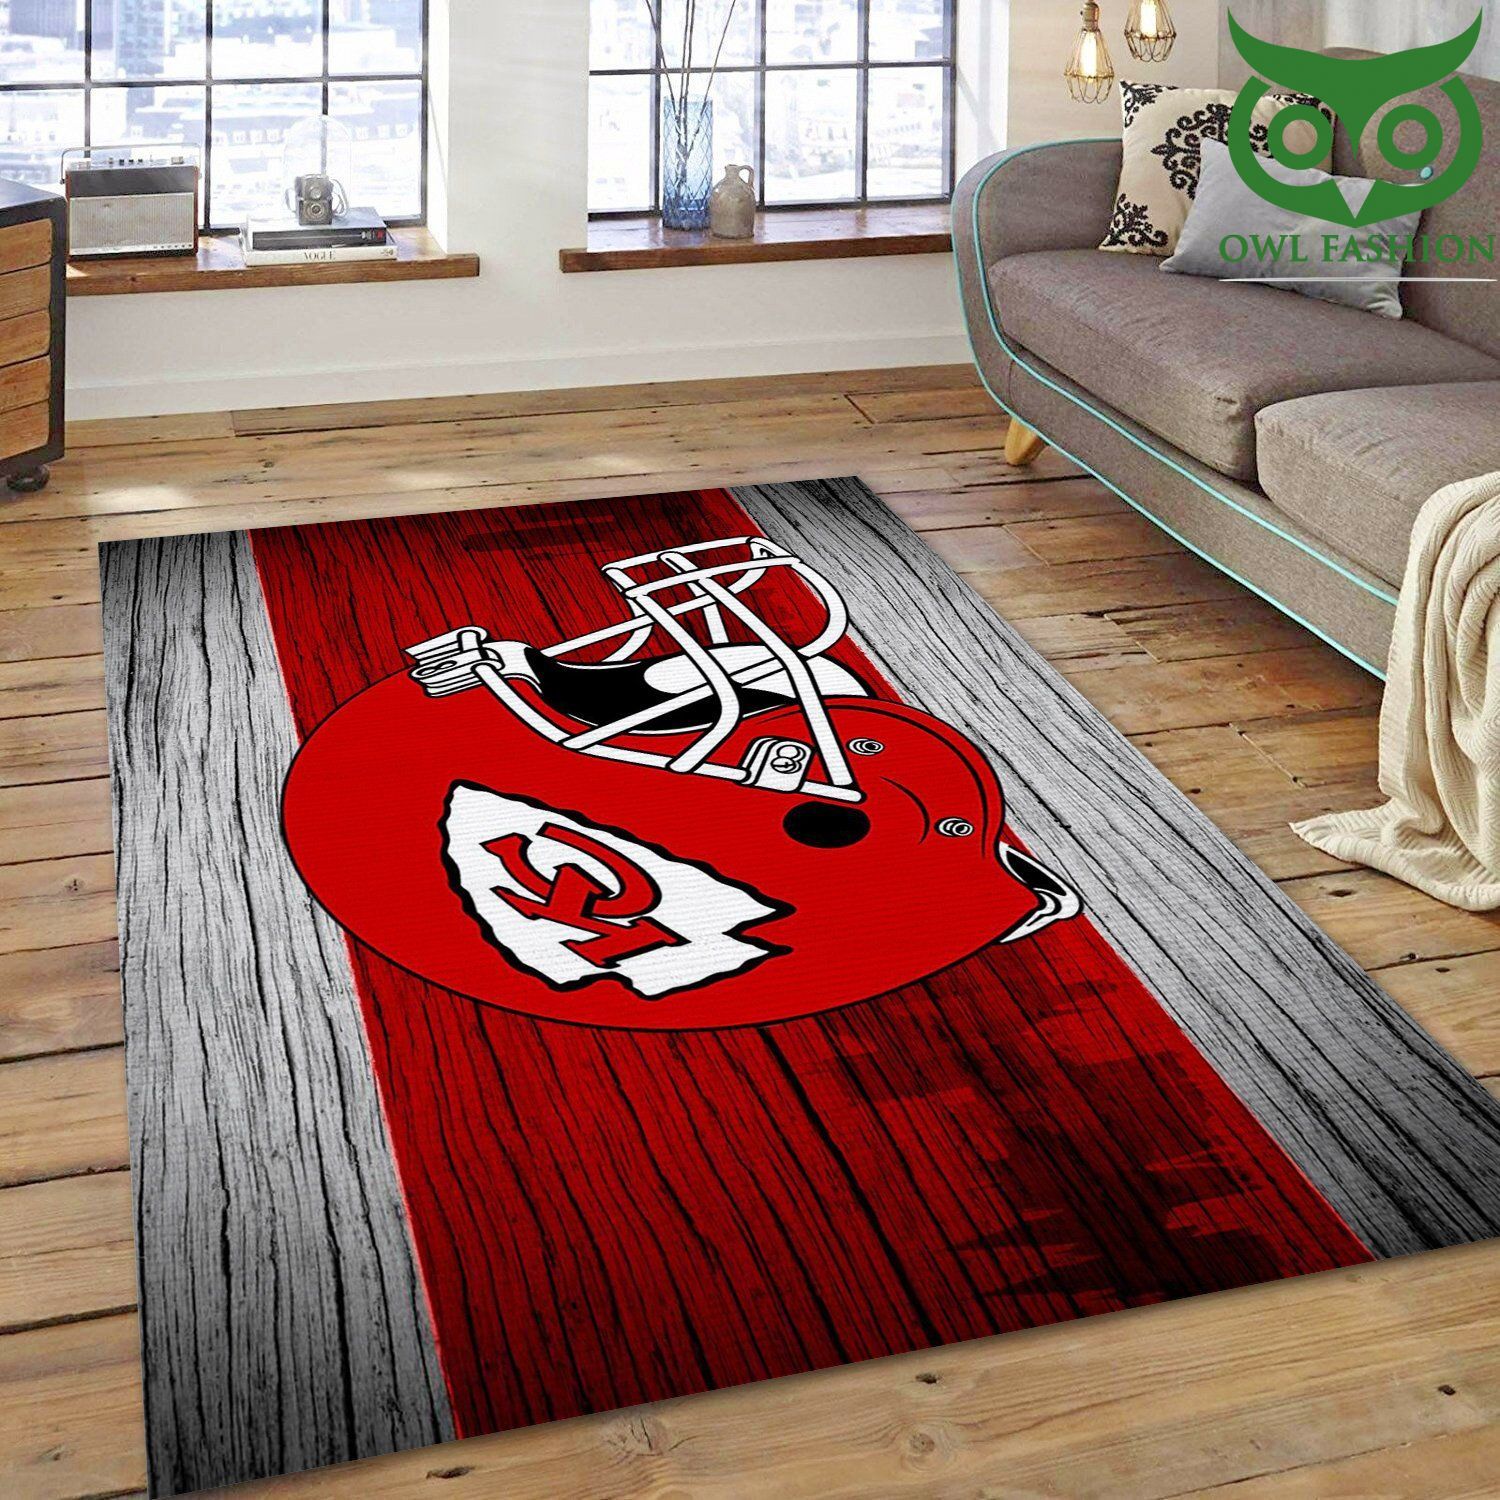 Kansas City Chiefs Nfl Area Rug For Gift Art carpet rug Home and floor Decoration